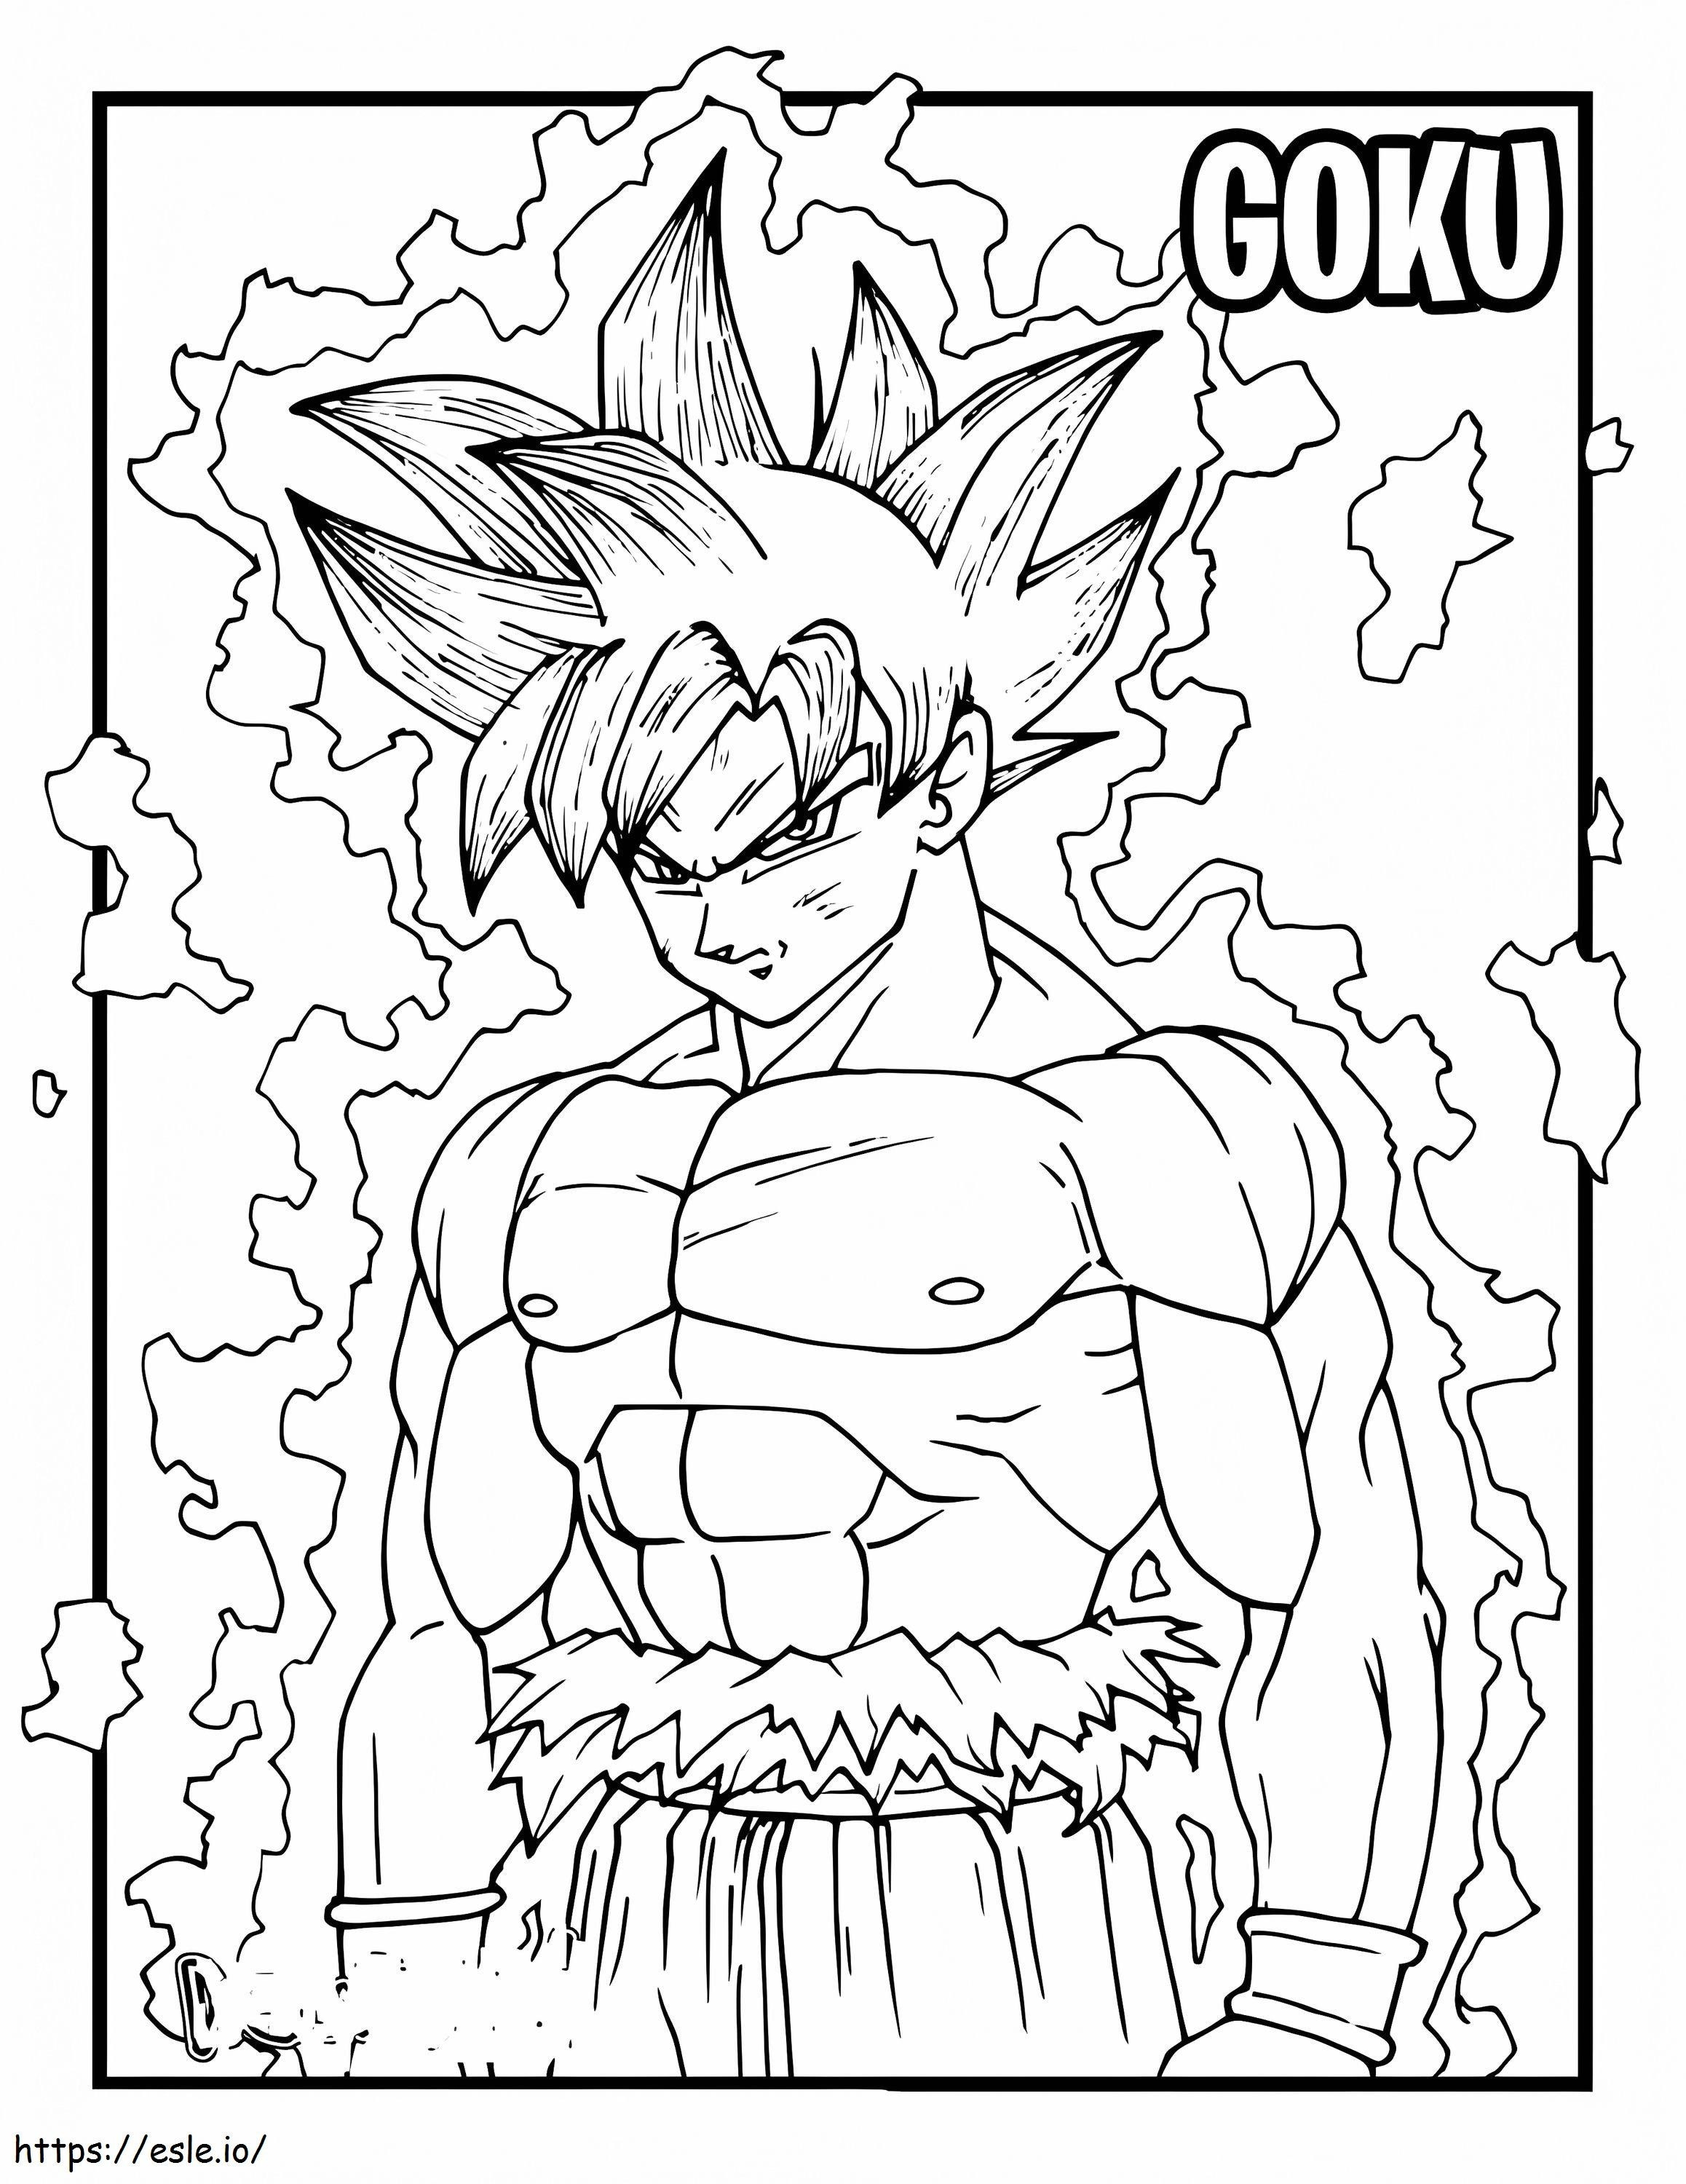 Son-Goku-Power ausmalbilder